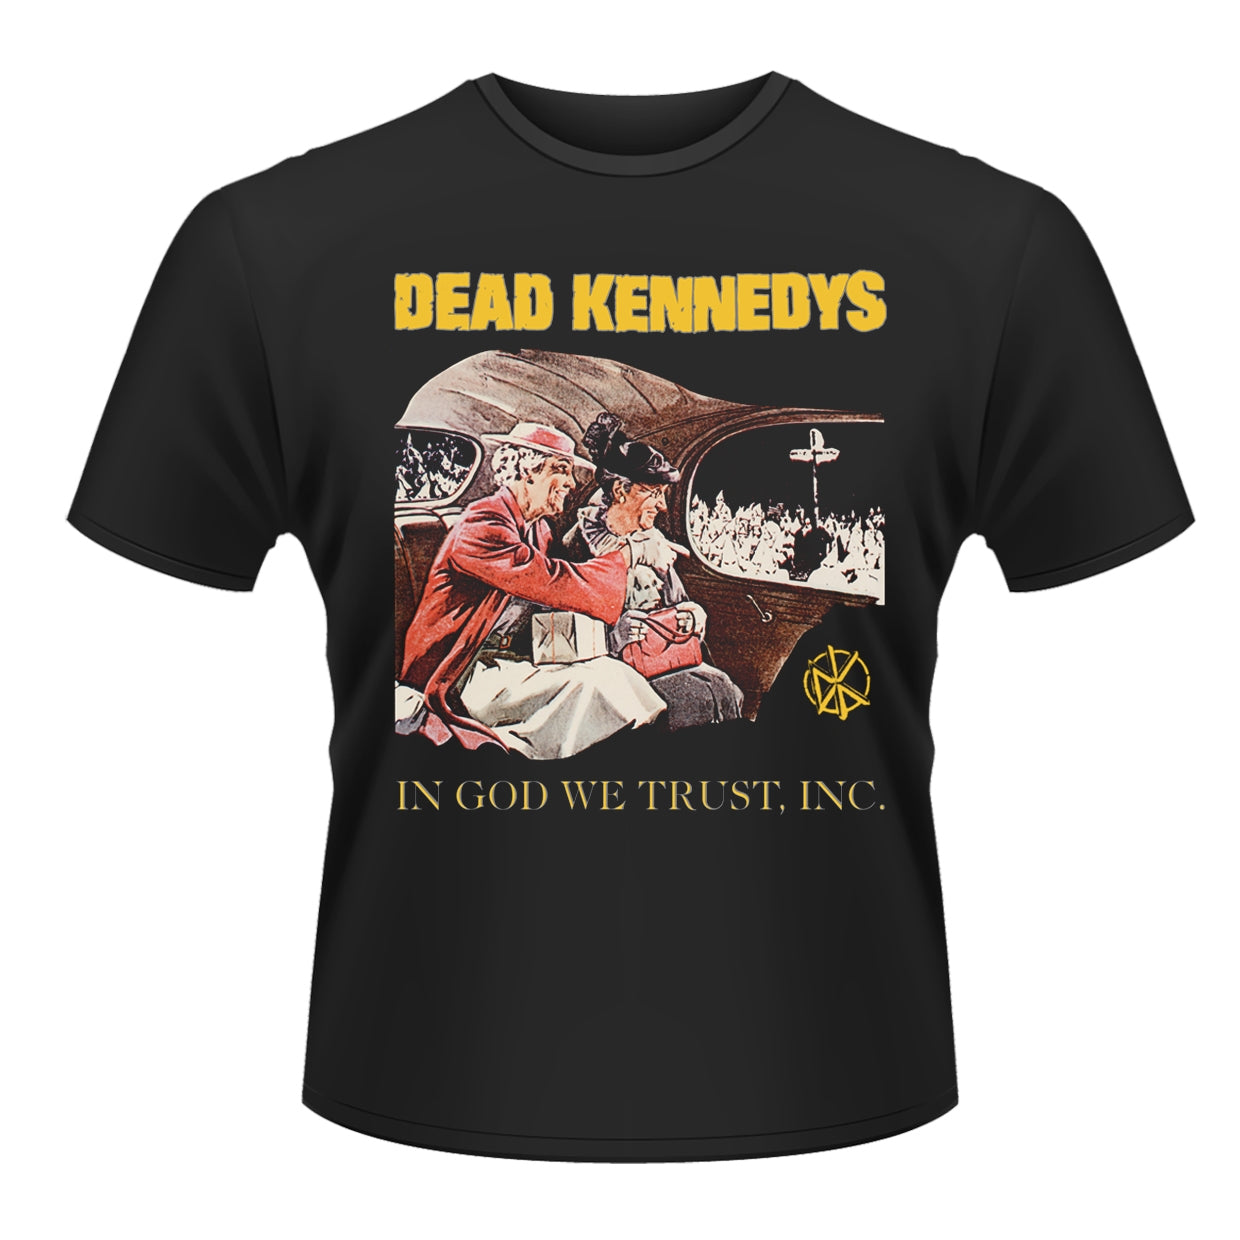 Dead Kennedys "In God We Trust" Black T shirt